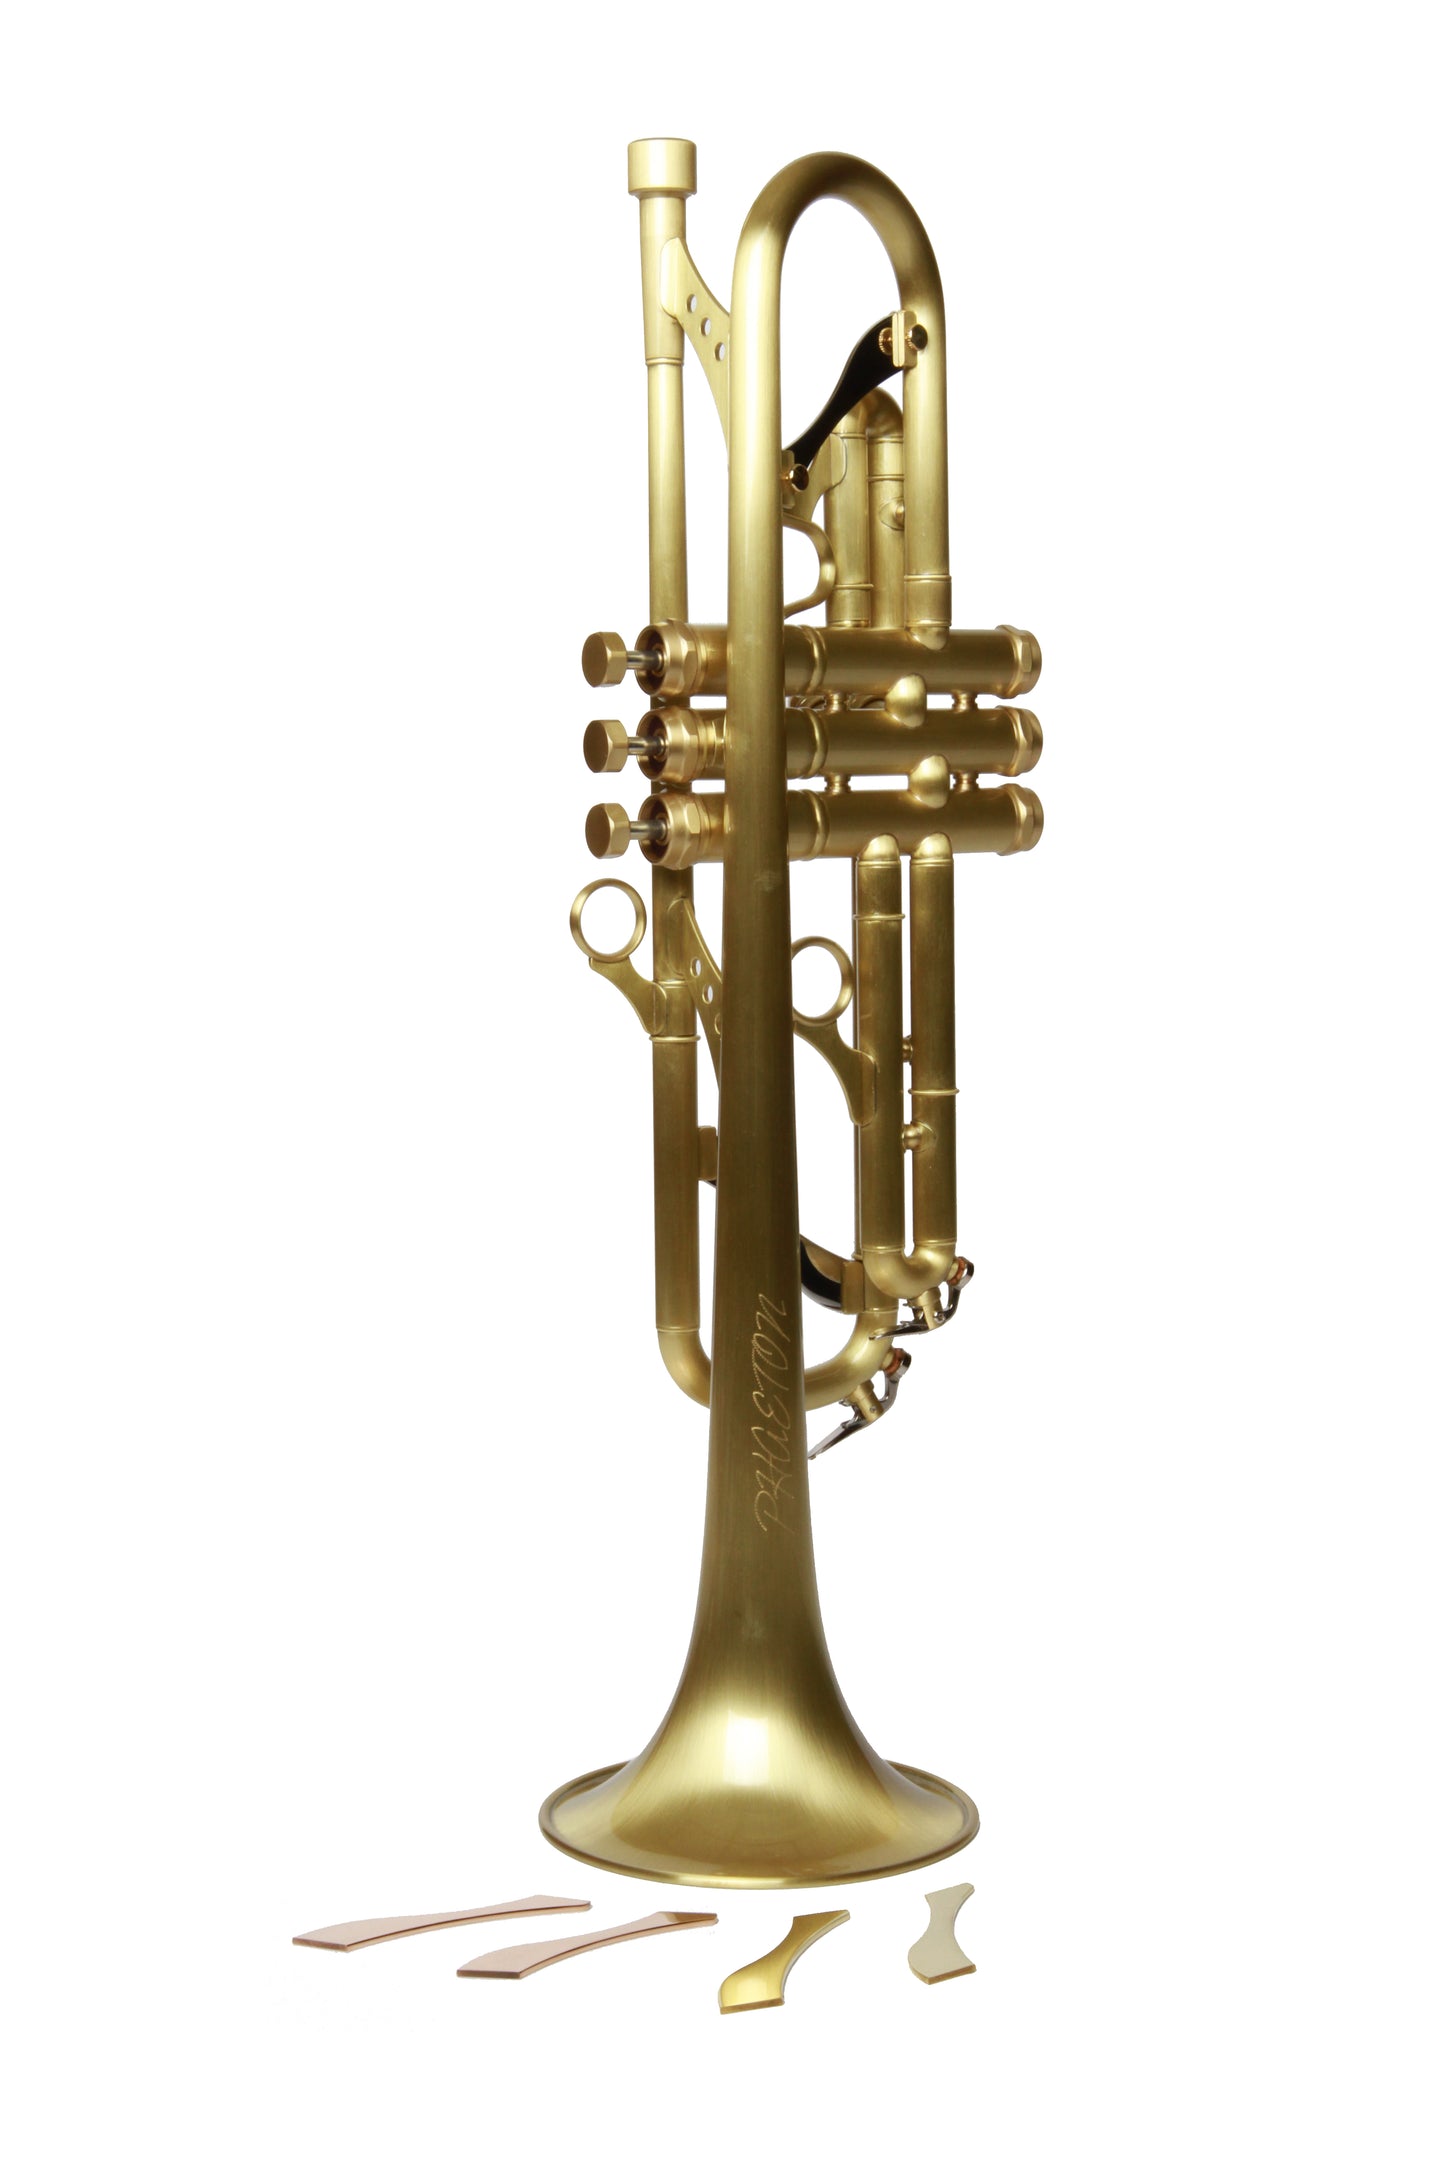 Phaeton PHT-FX-1100 Bb Custom Trumpet